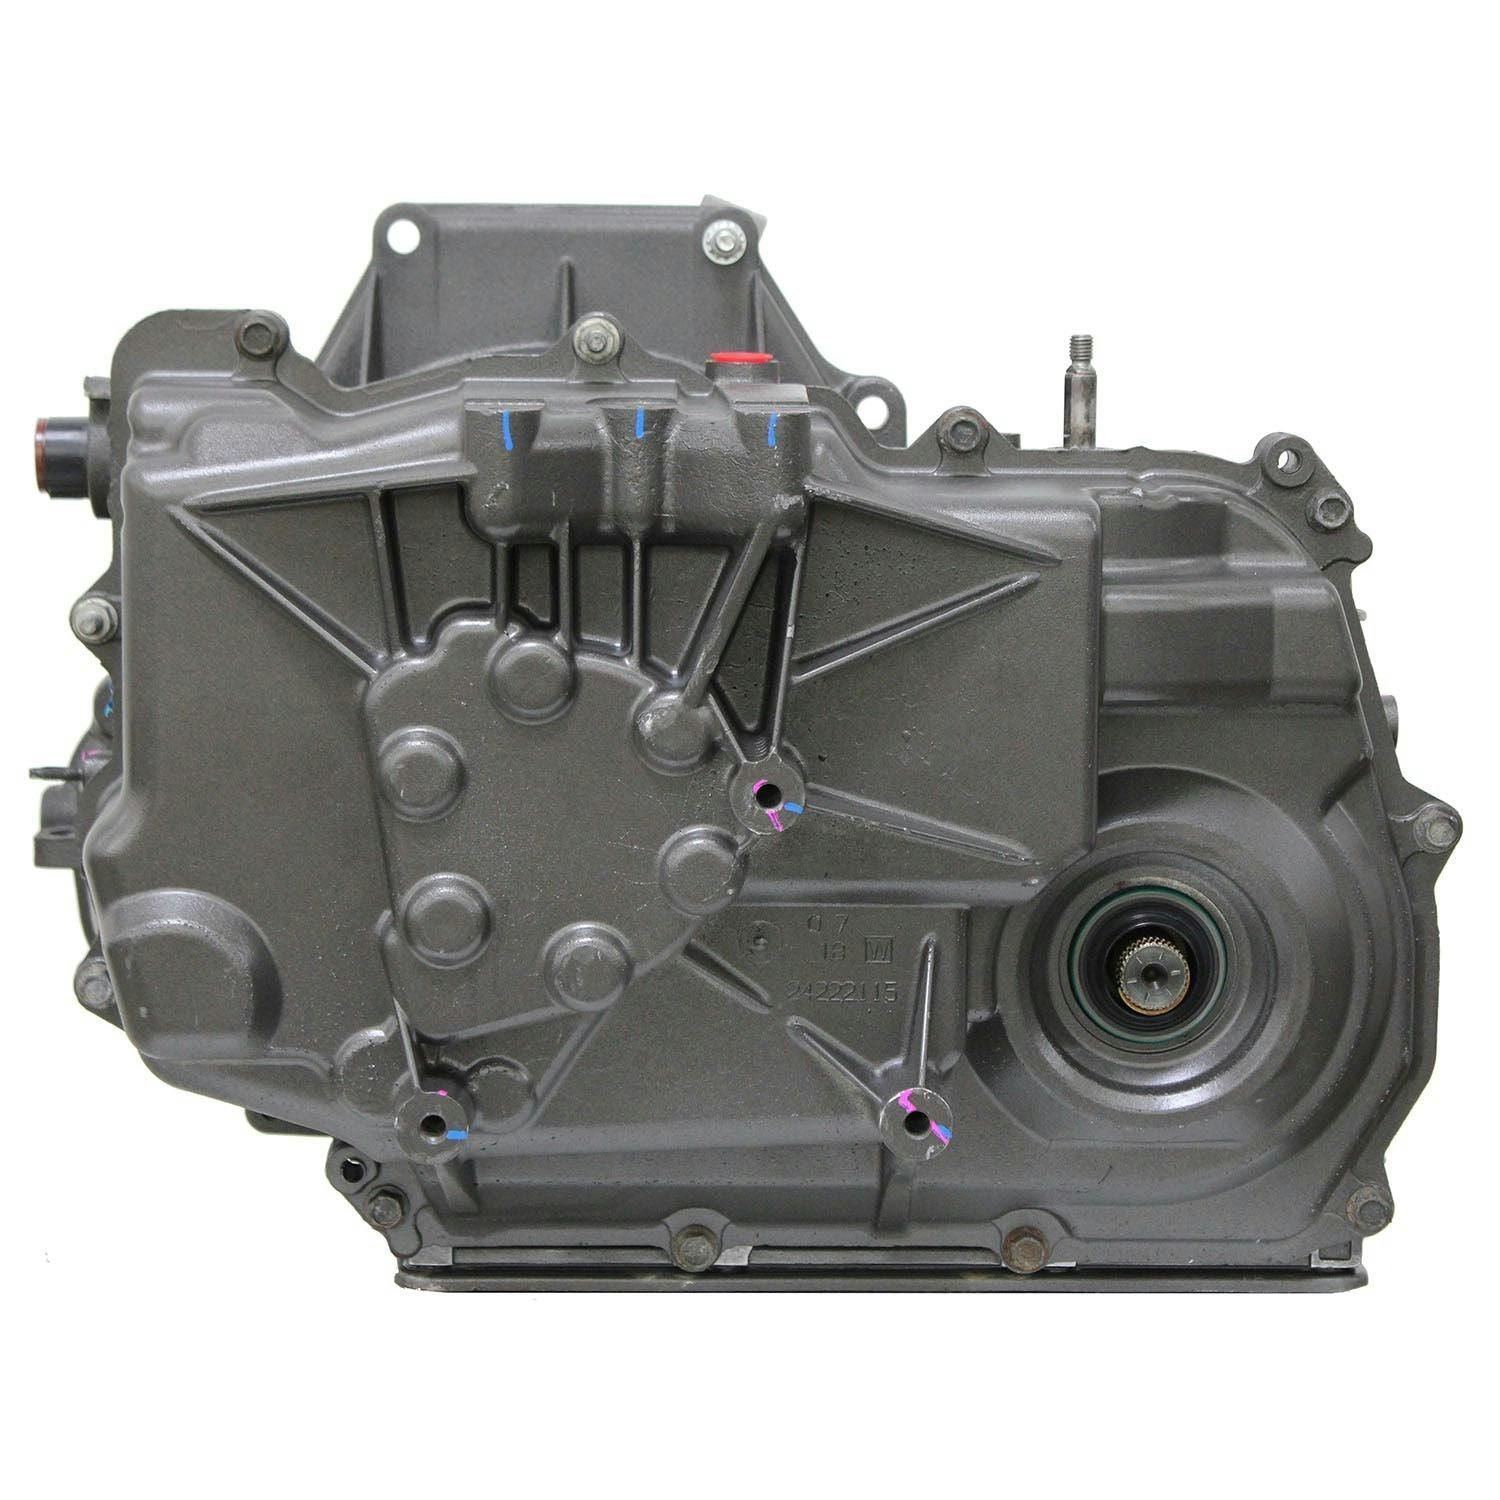 Automatic Transmission for 2005-2008 Chevrolet Malibu/Pontiac G6 FWD with 3.5L V6 Engine